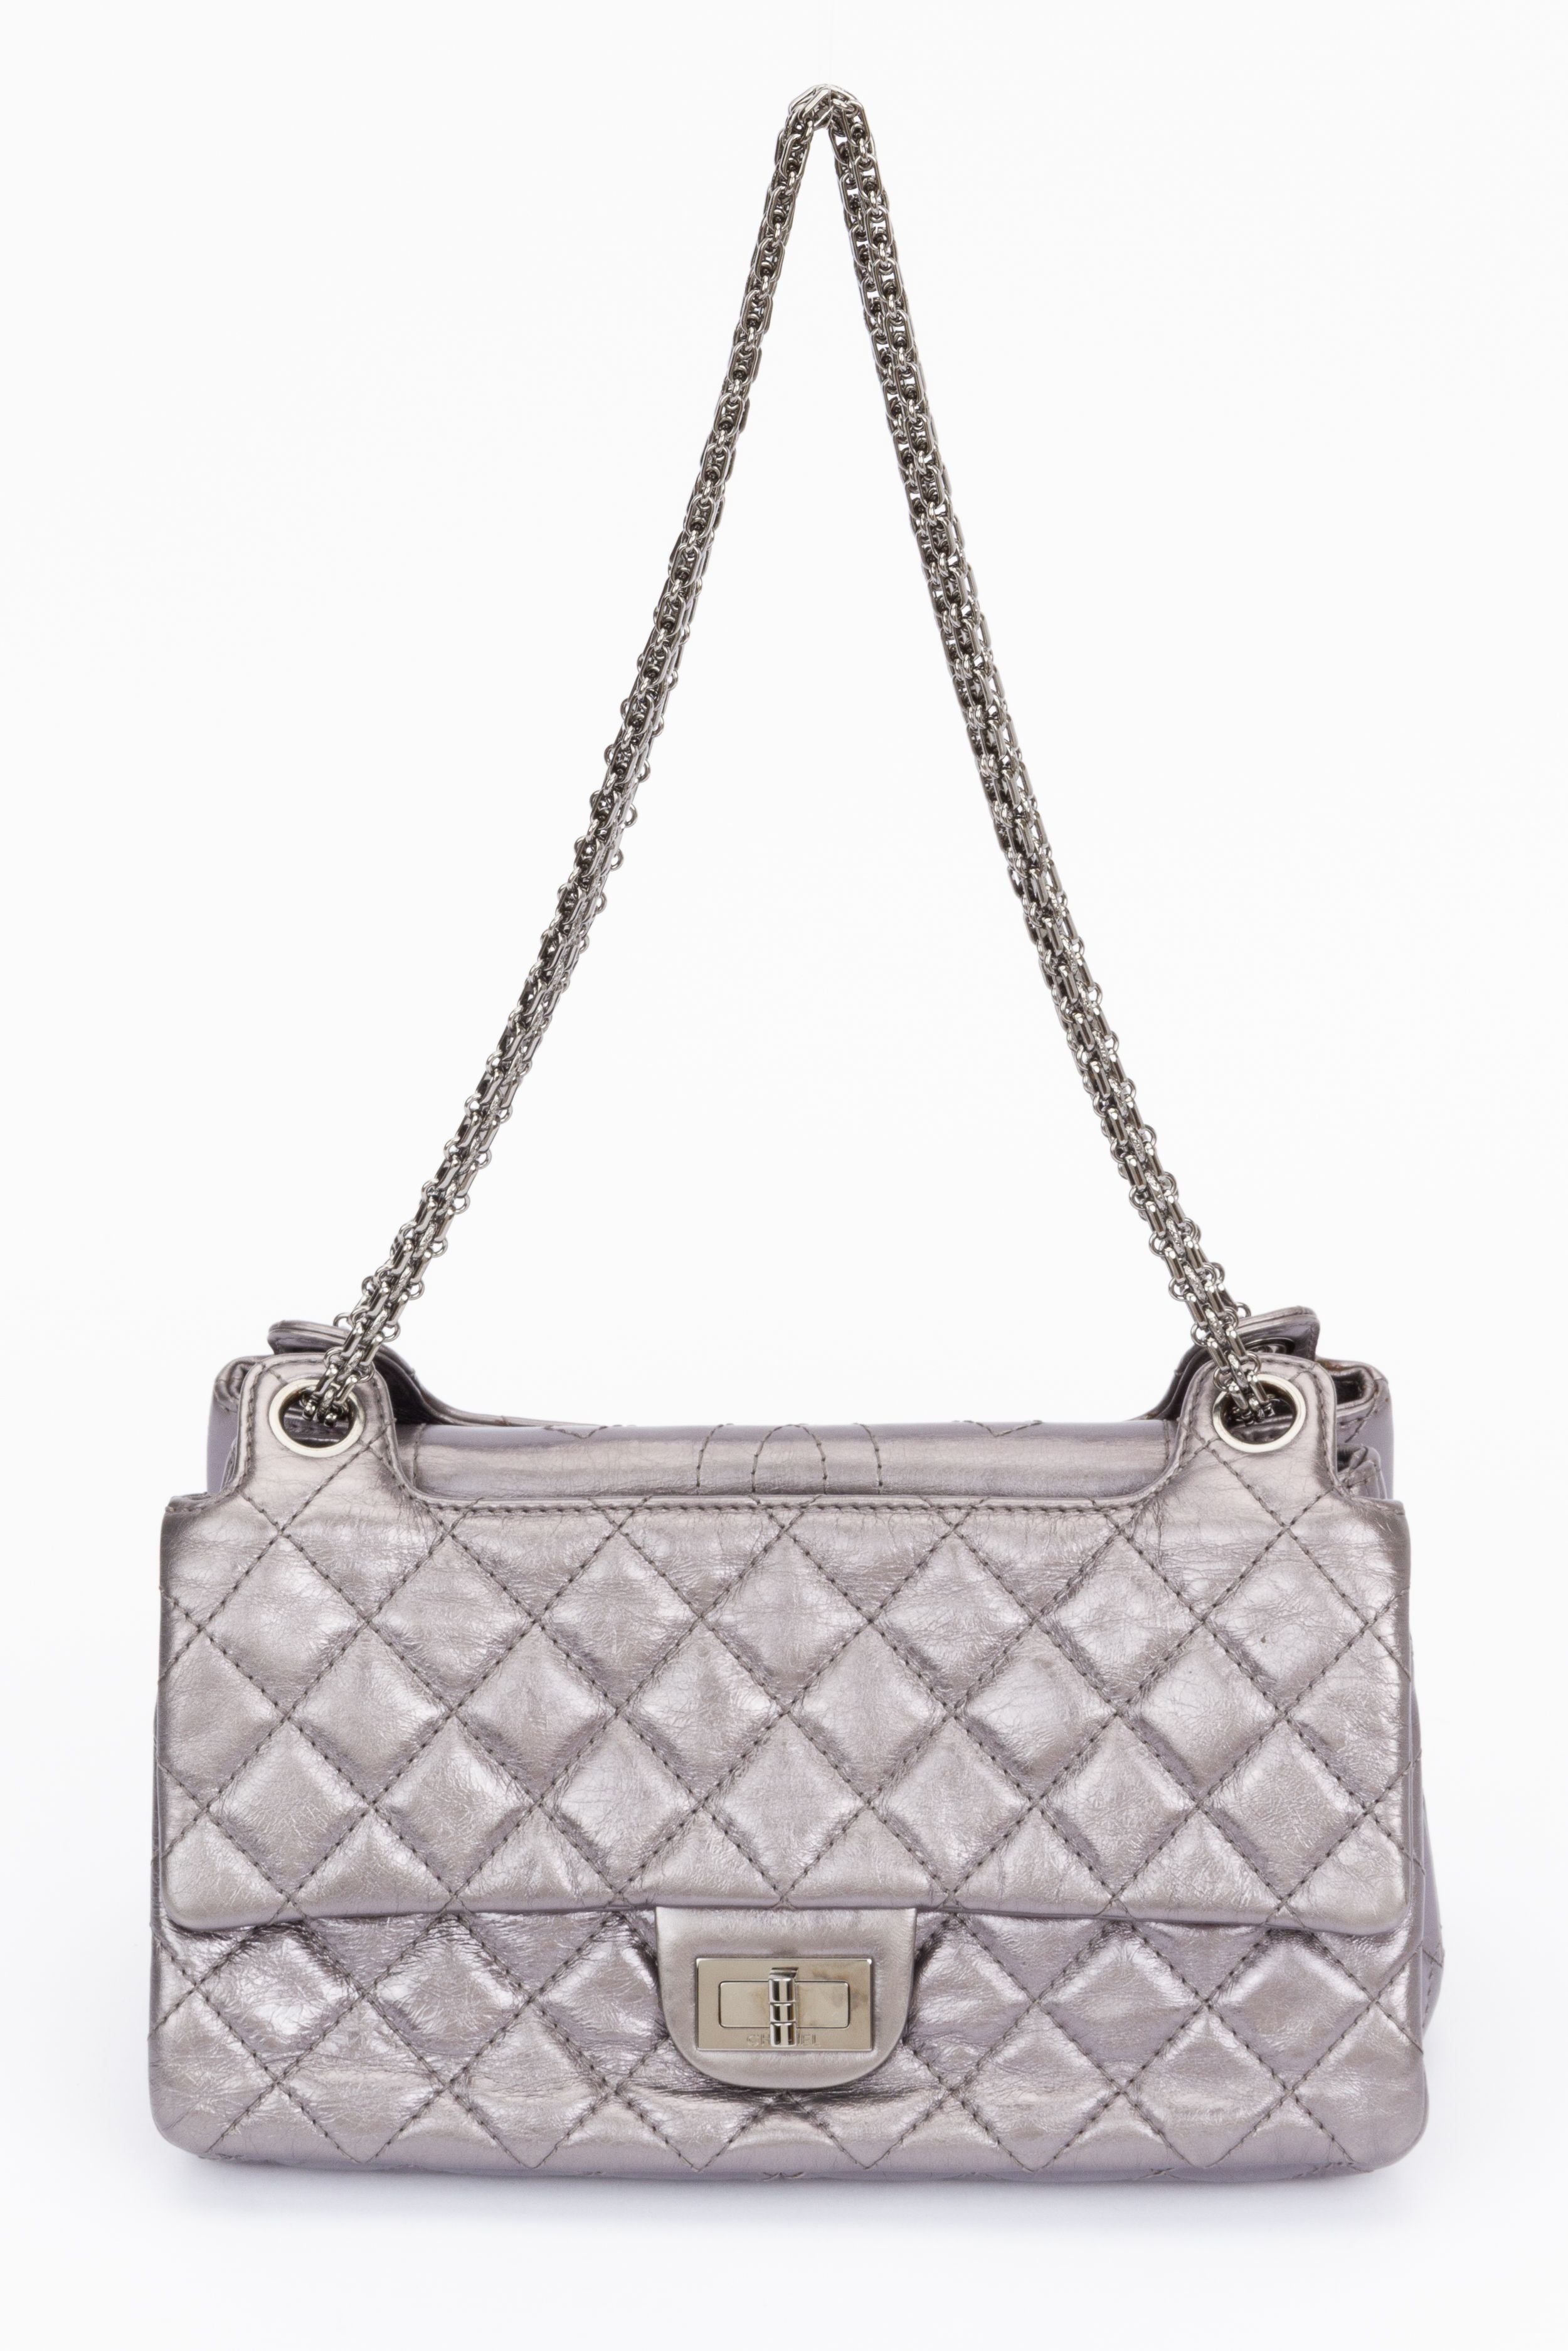 Chanel Reissue Accordian Bag Metallic - Vintage Lux